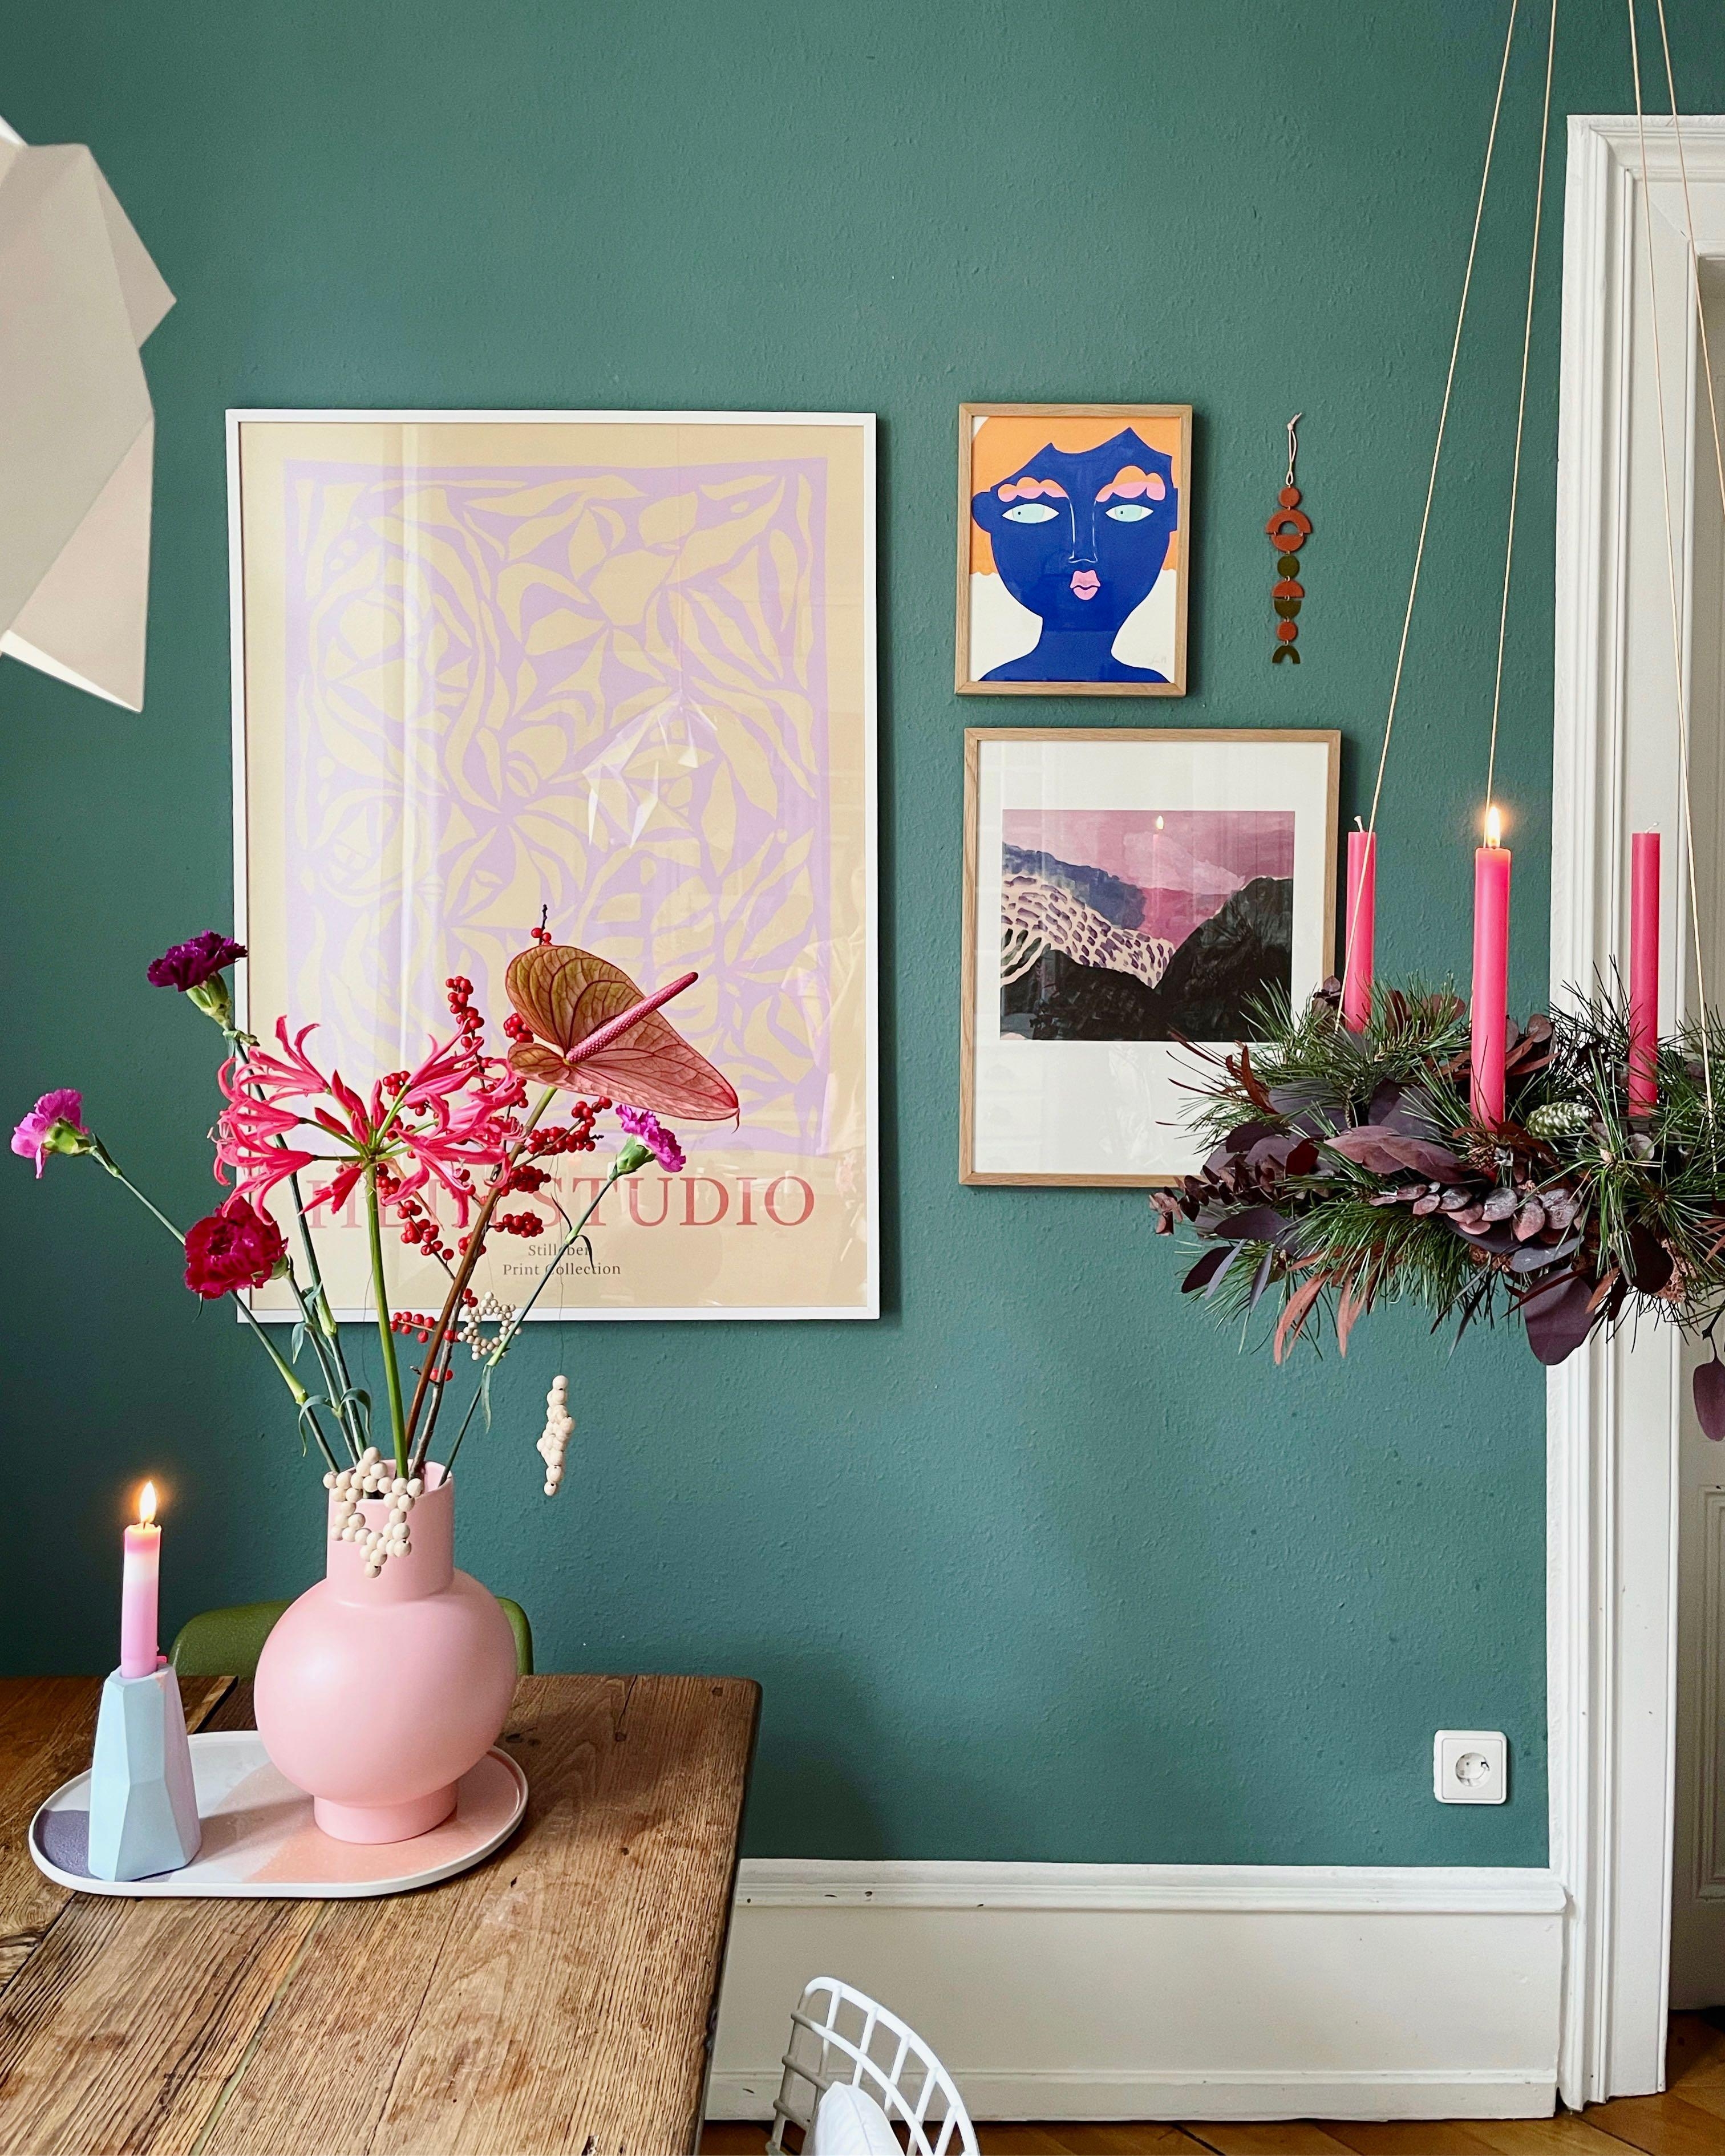 #hangingdecor #adventskranz #pinkflowers #freshdecor #decoration #christmas #interior #couchstyle #livingroom @Studiobloom_design